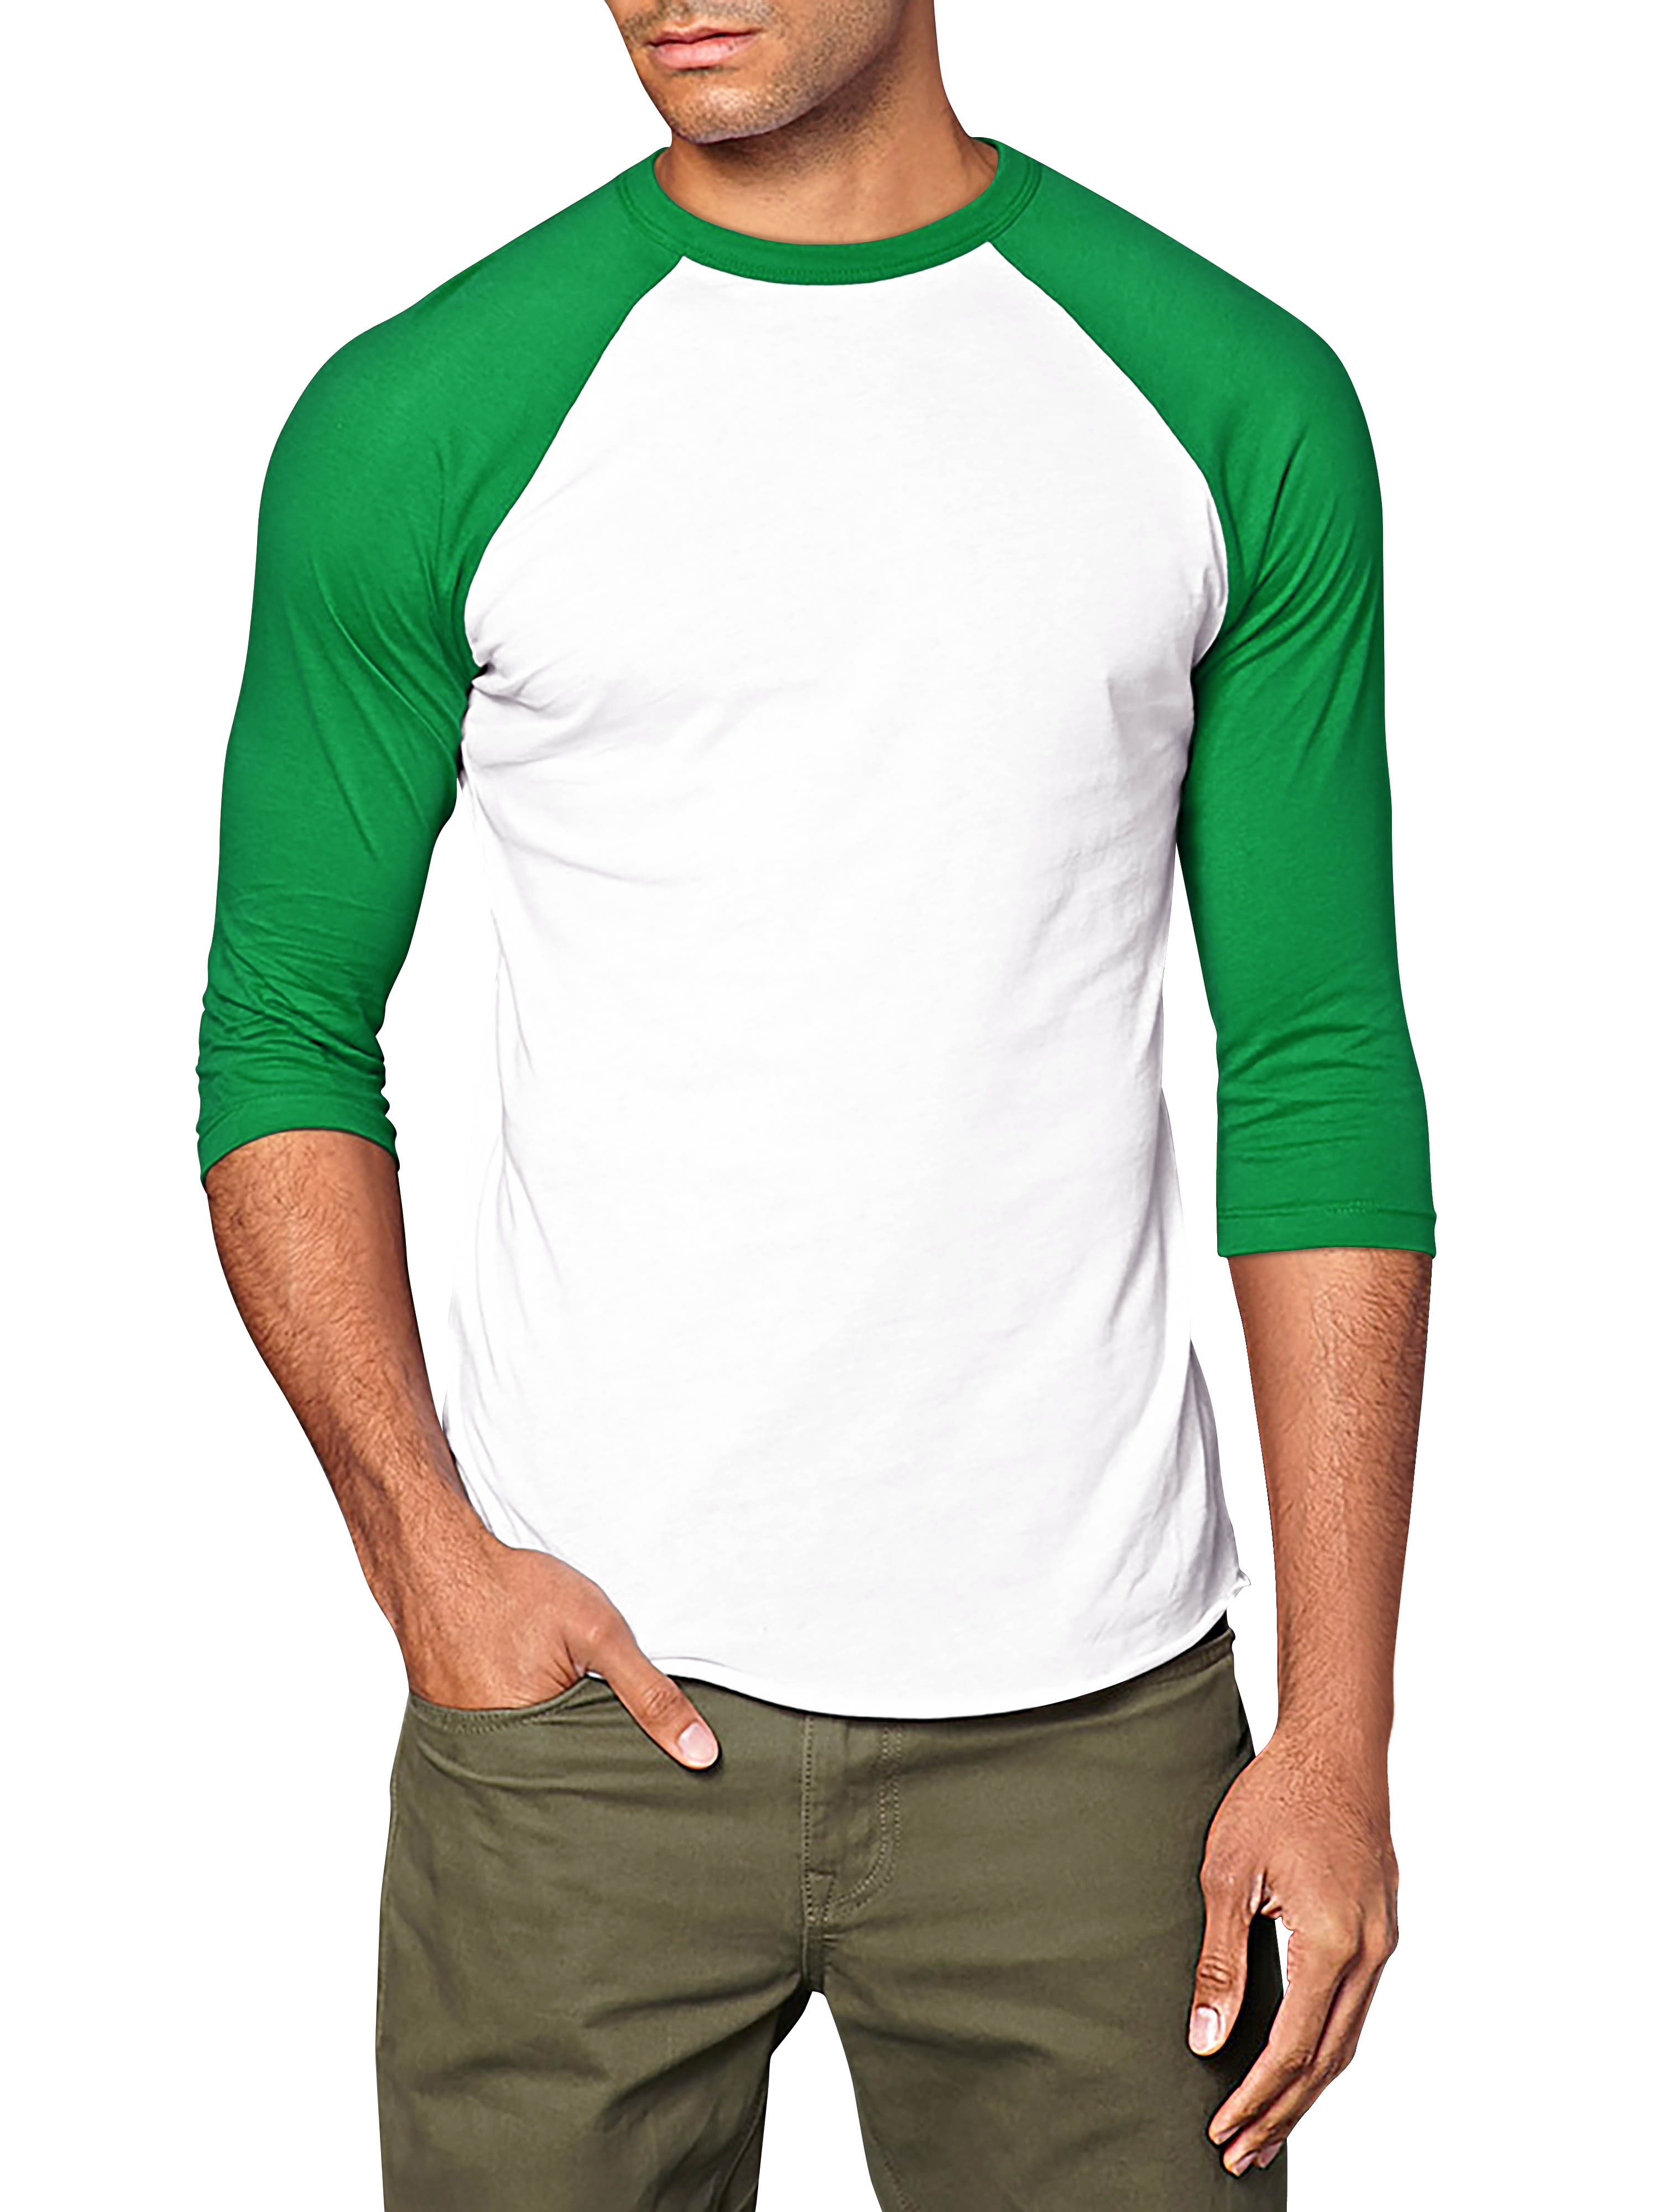 Ma Croix Mens 3/4 Sleeve Raglan Baseball T Shirt - image 1 of 4